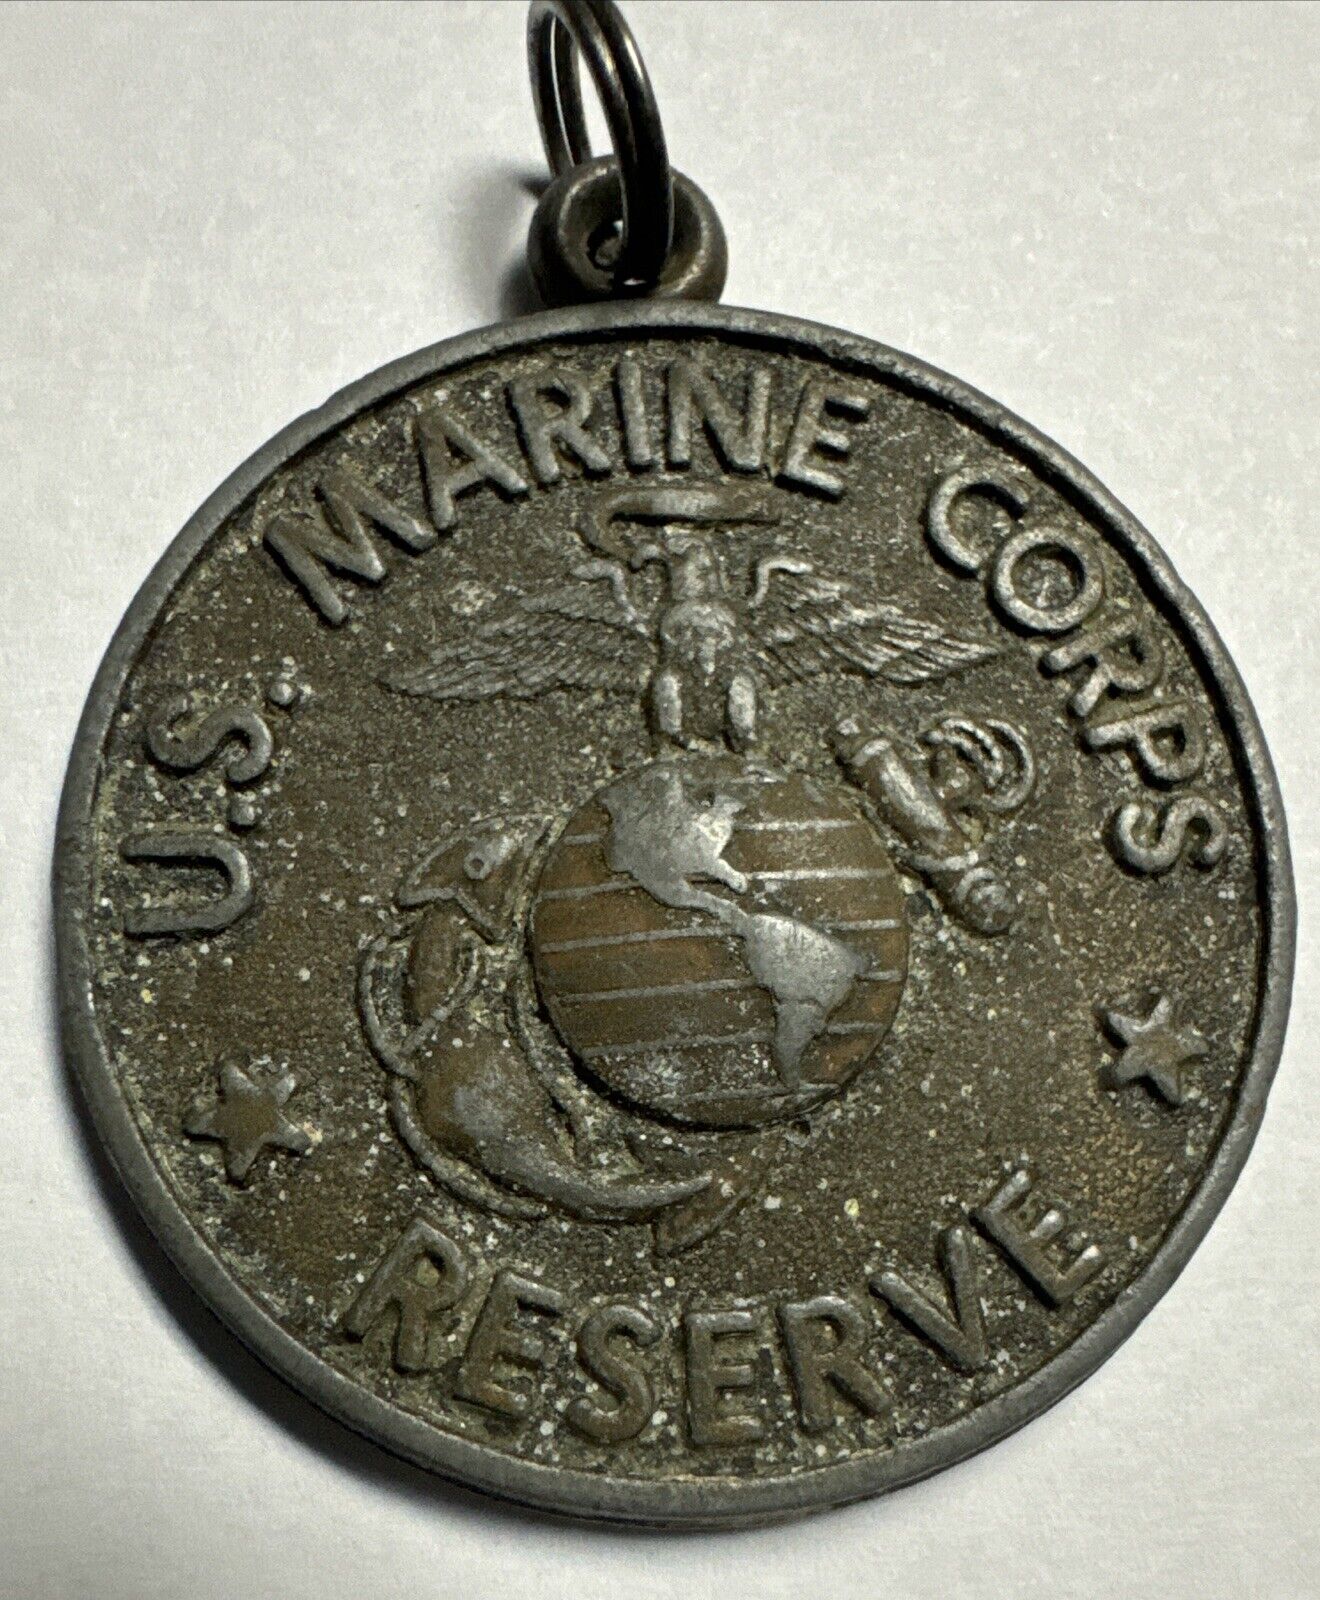 RARE Vintage United States Marine Corps Reserve Military Medallion Readiness